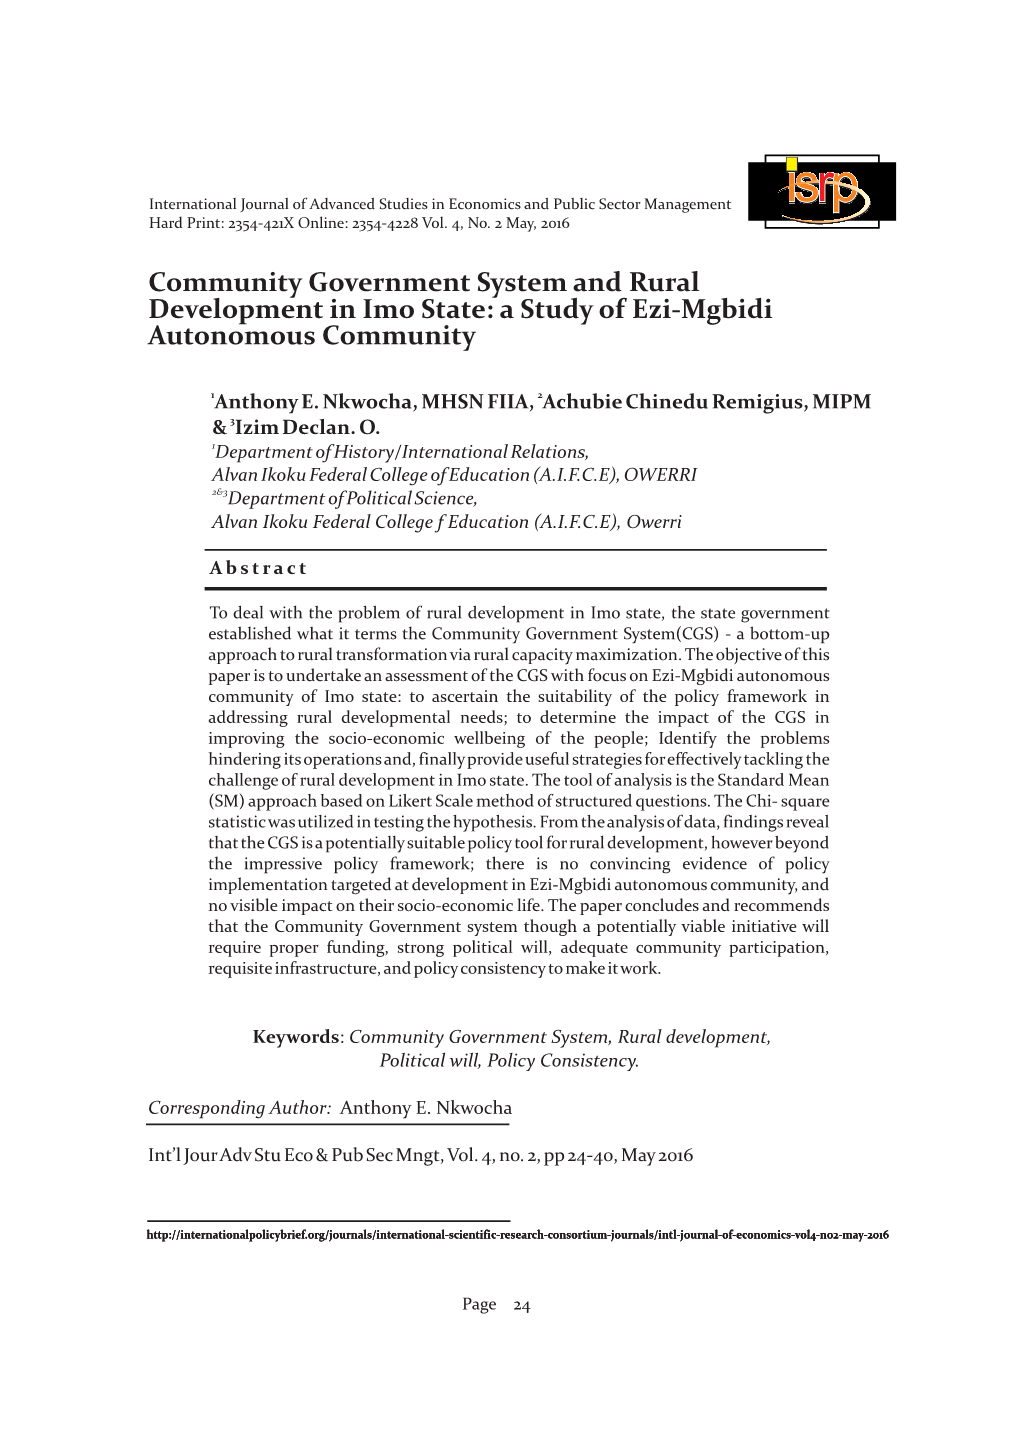 Community Government System and Rural Development in Imo State: a Study of Ezi-Mgbidi Autonomous Community